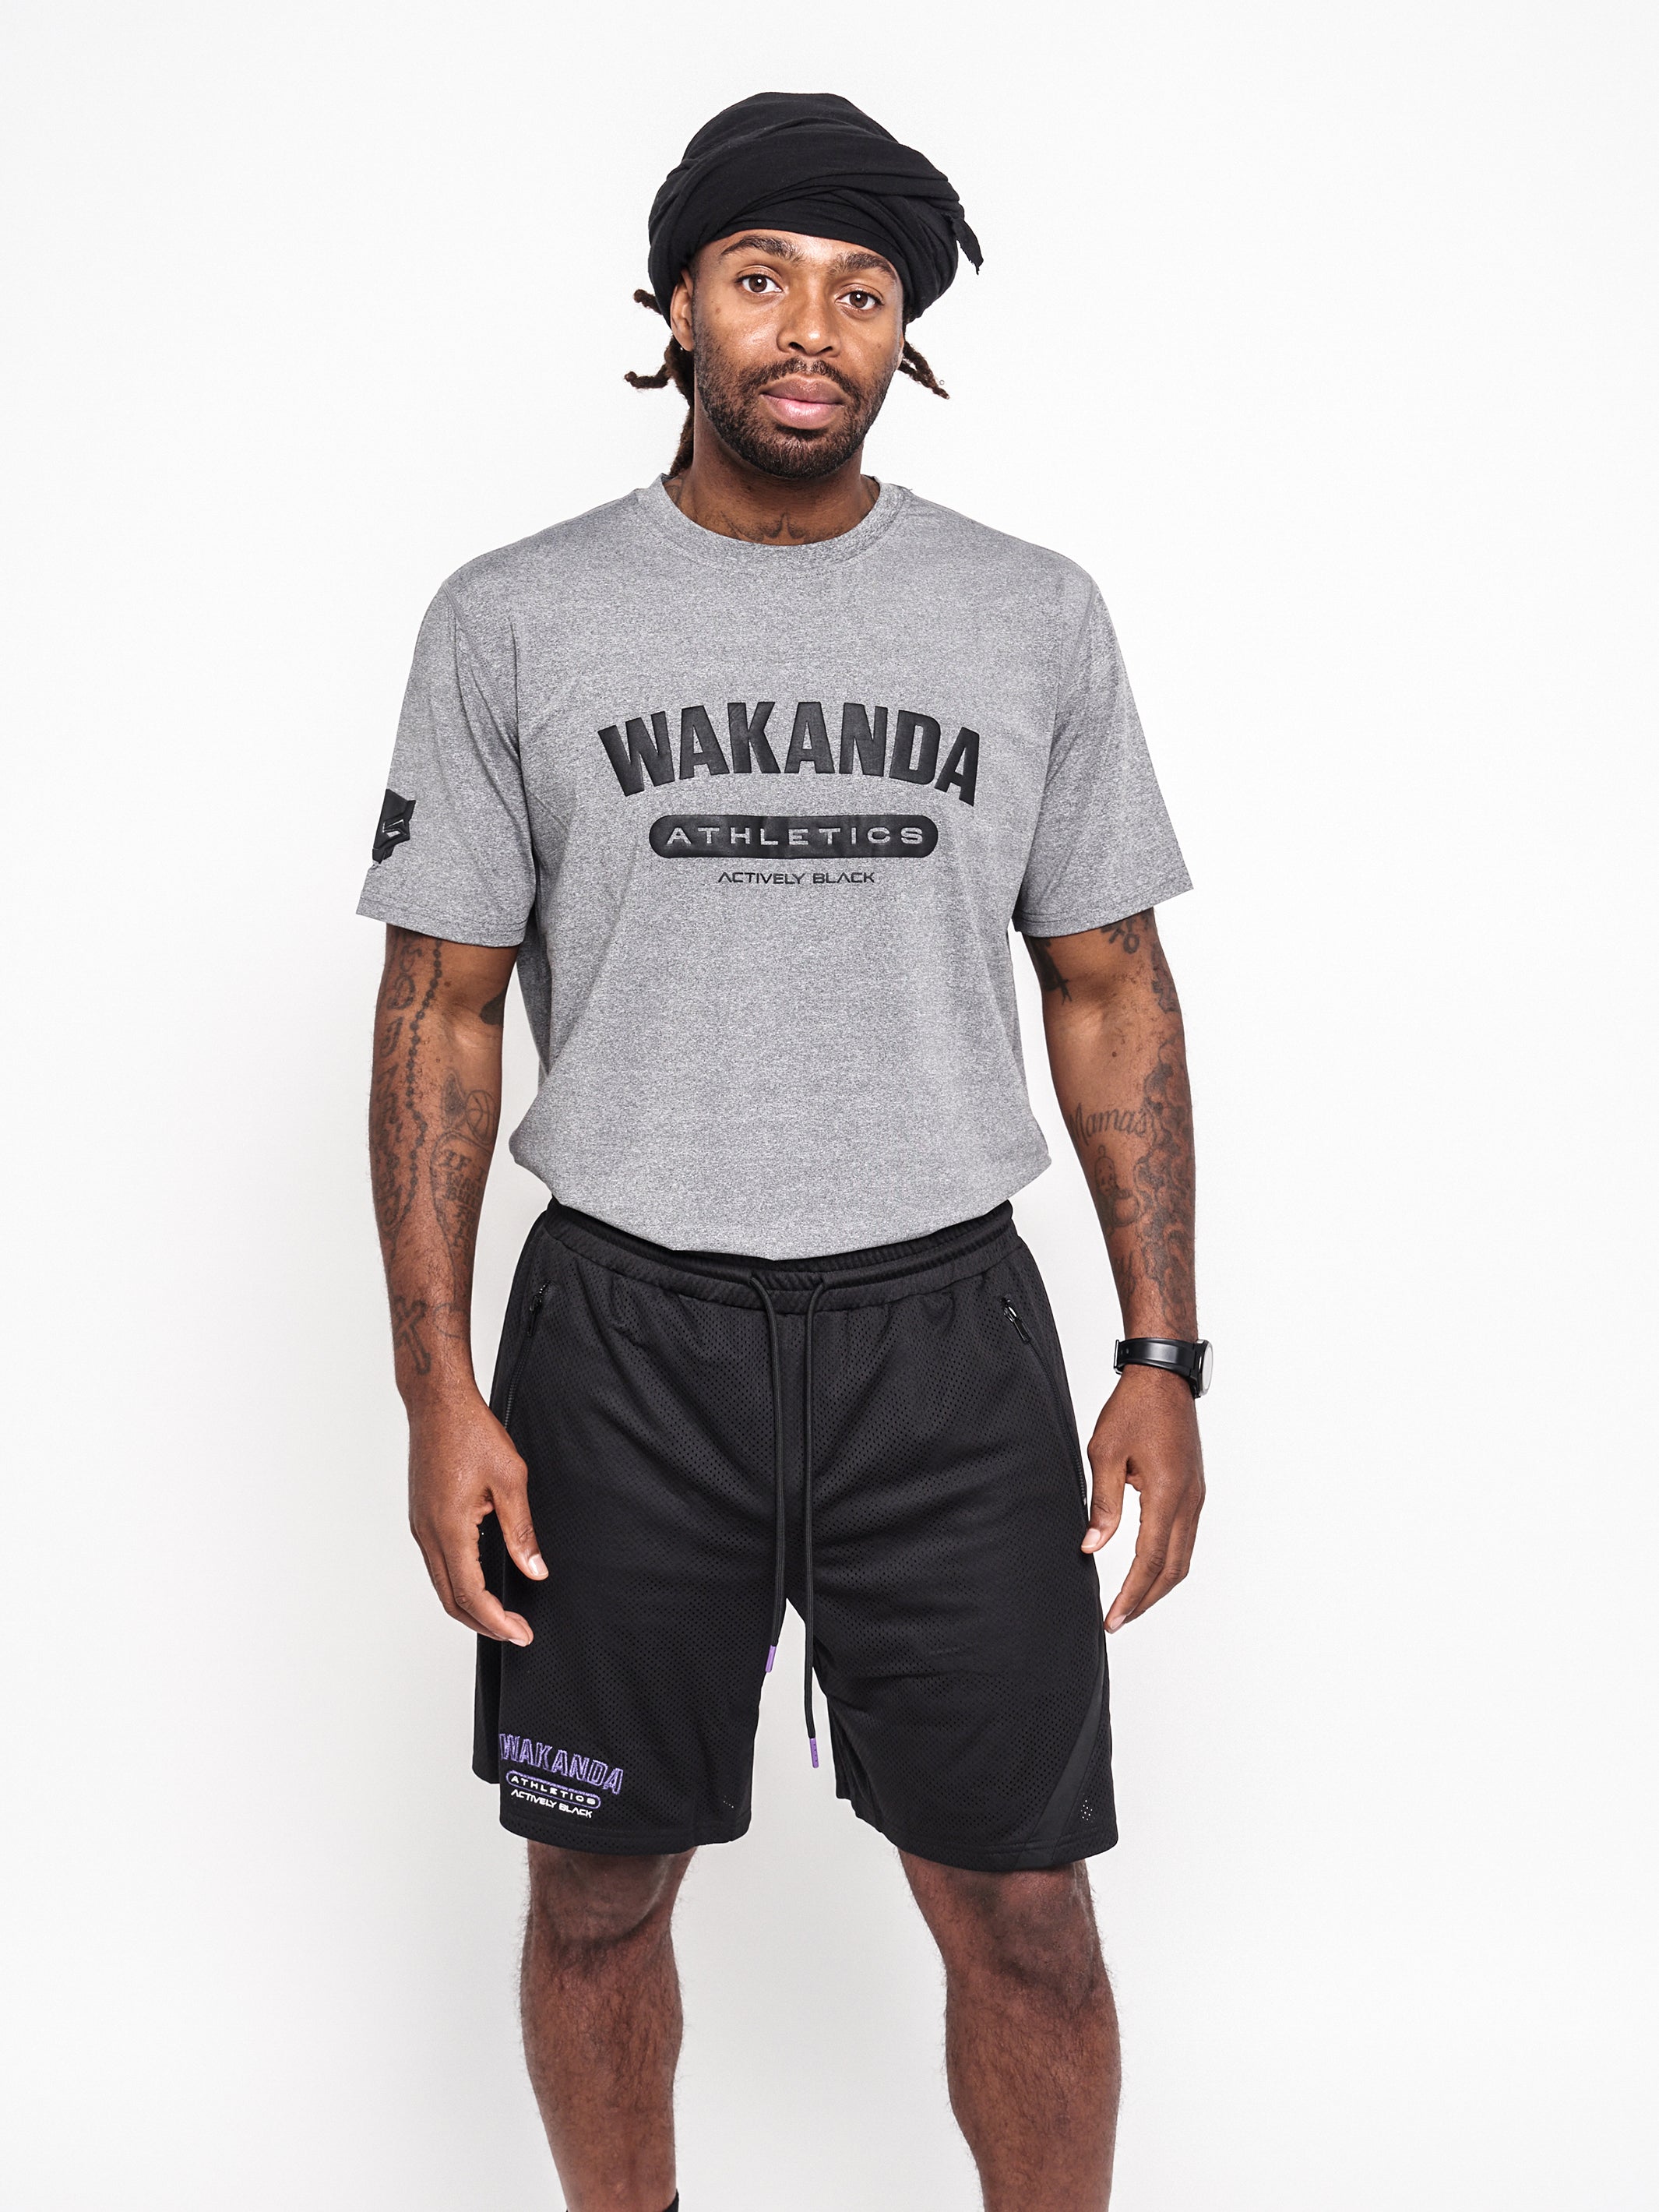 Men's Wakanda Athletics Shirt